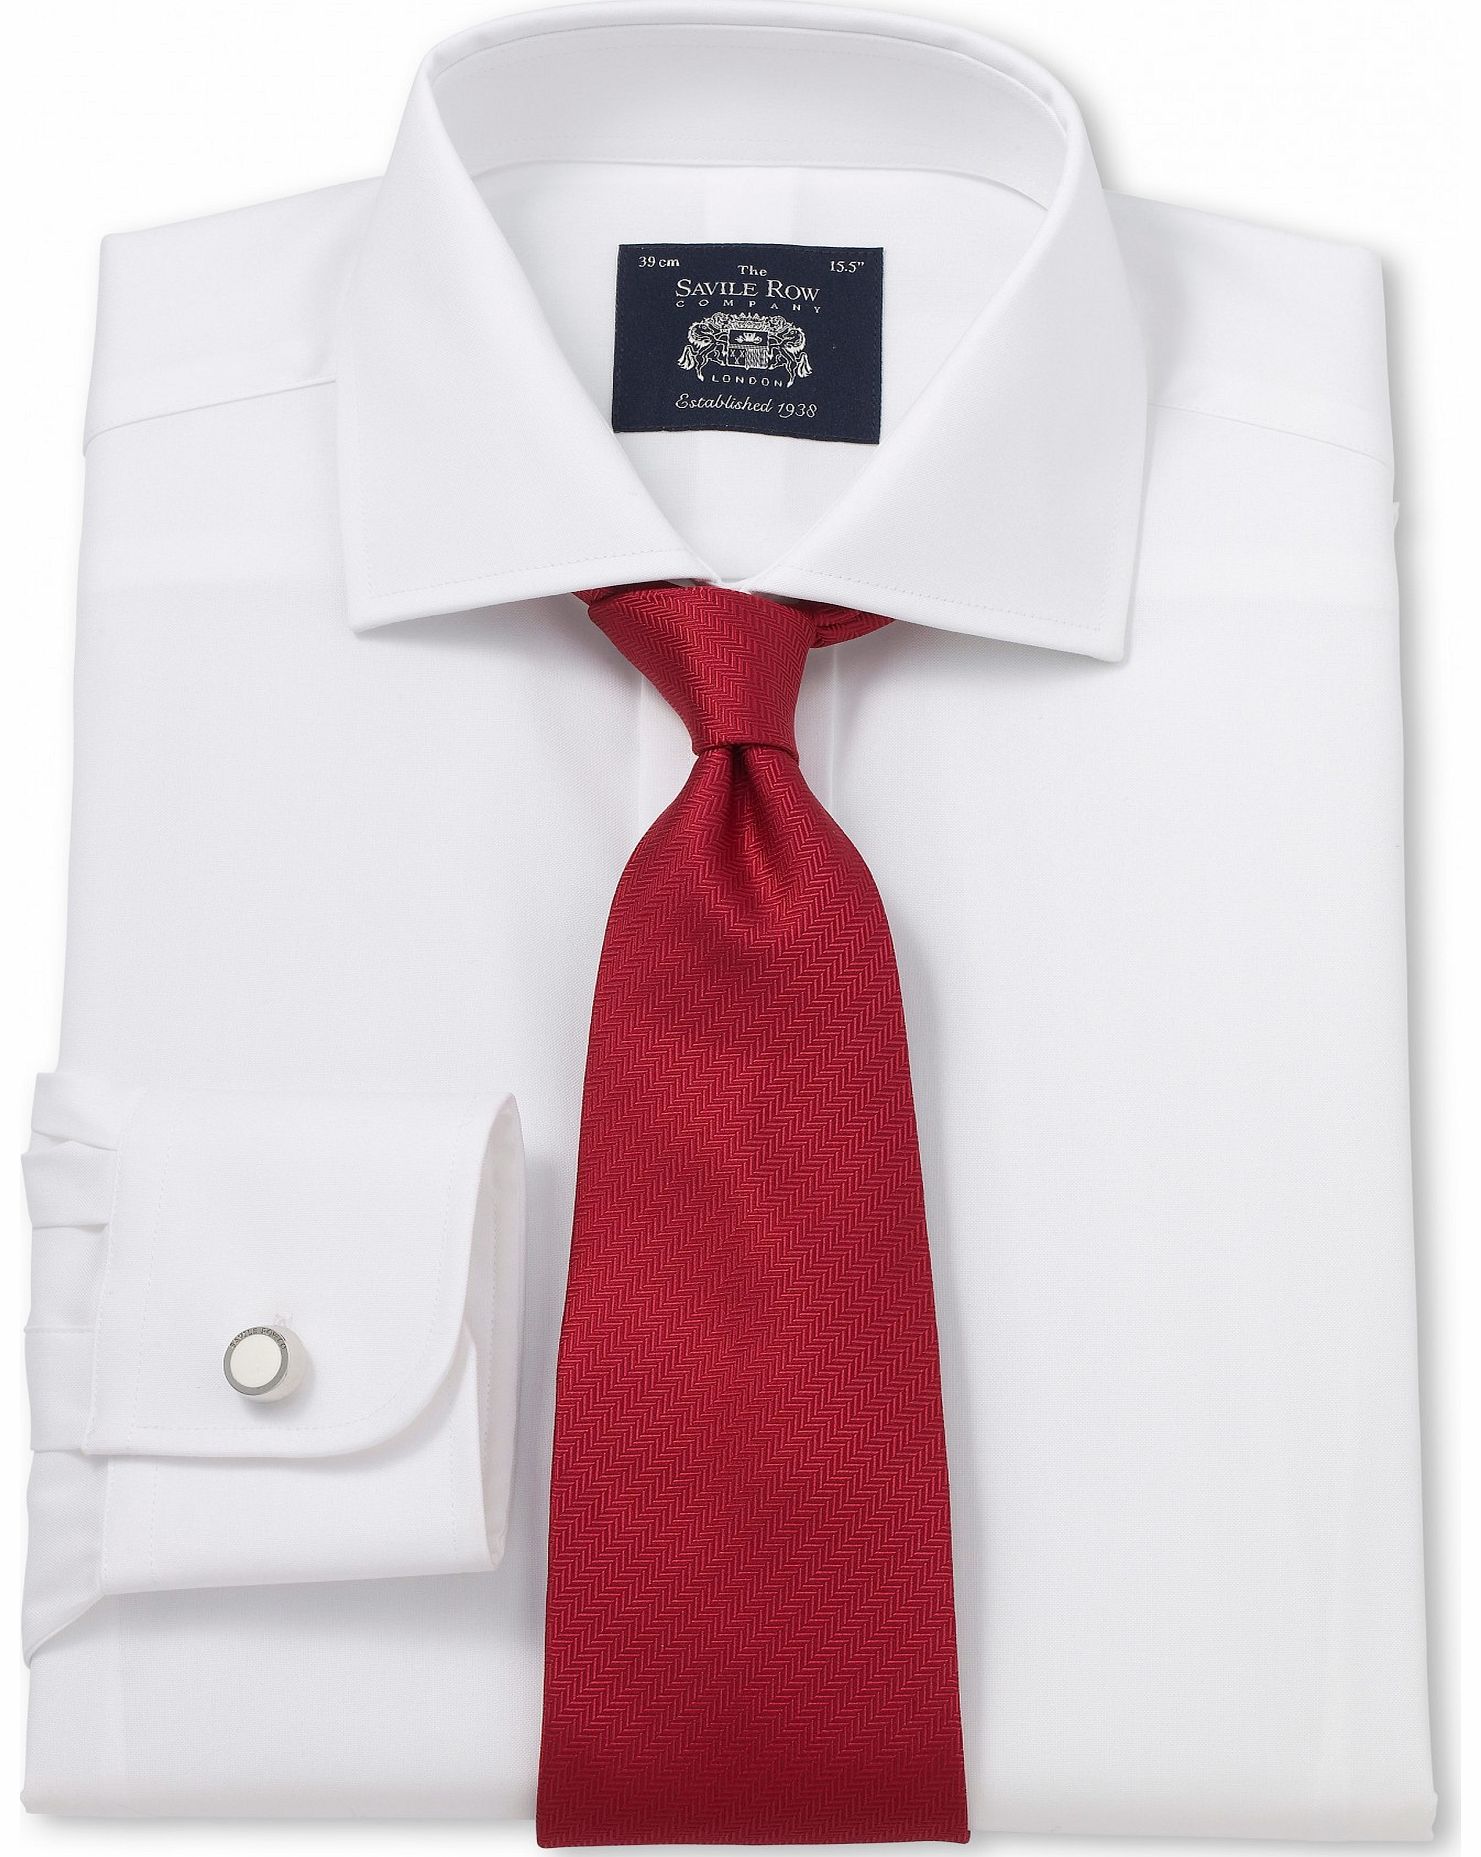 Savile Row Company White Poplin Non Iron Slim Fit Shirt 15`` Single